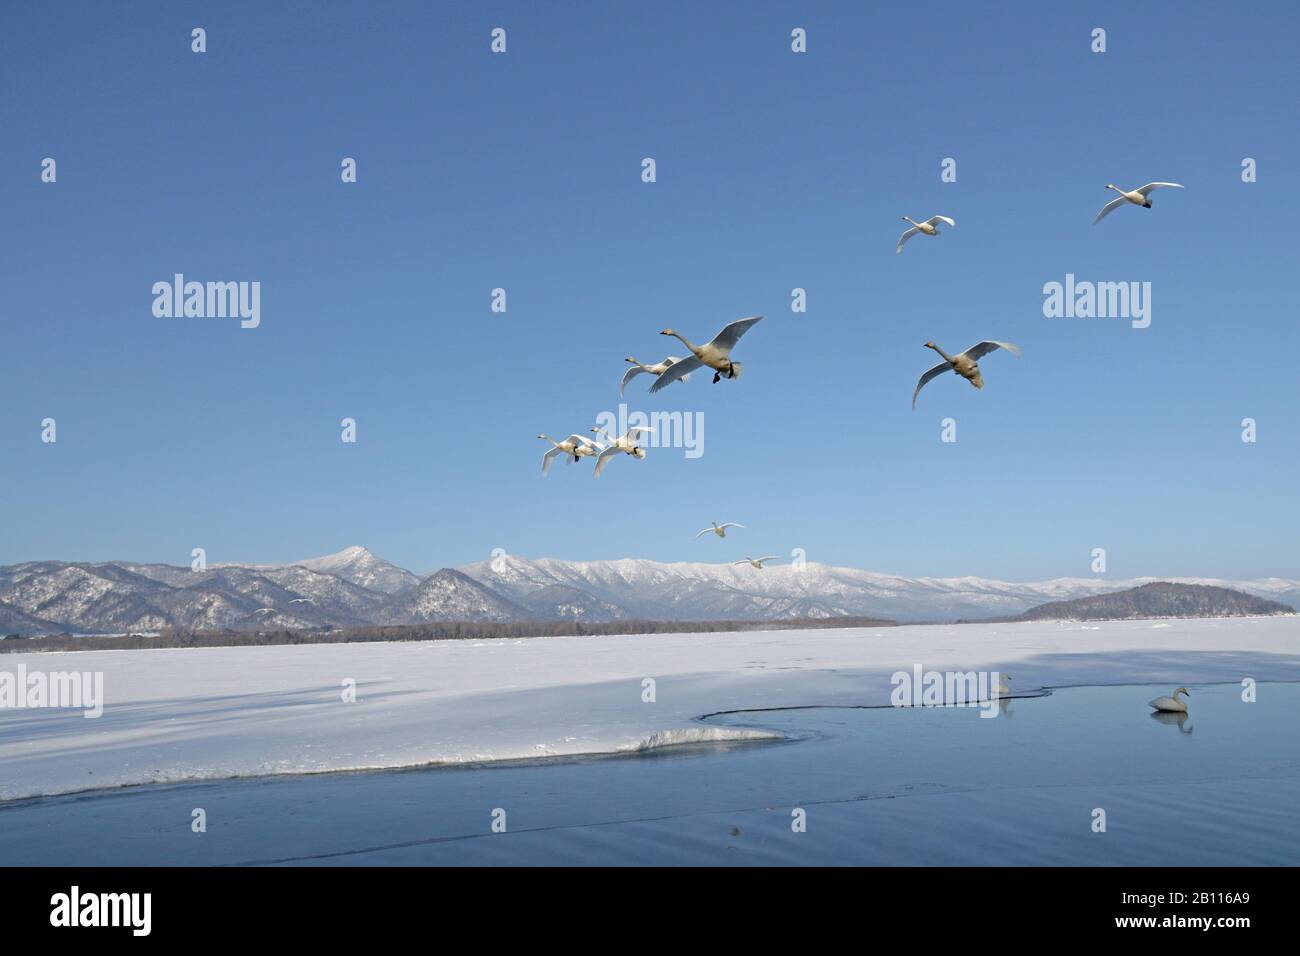 whooper swan (Cygnus cygnus), group in flight over winter landscape, Japan, Hokkaido, Kushiro Stock Photo